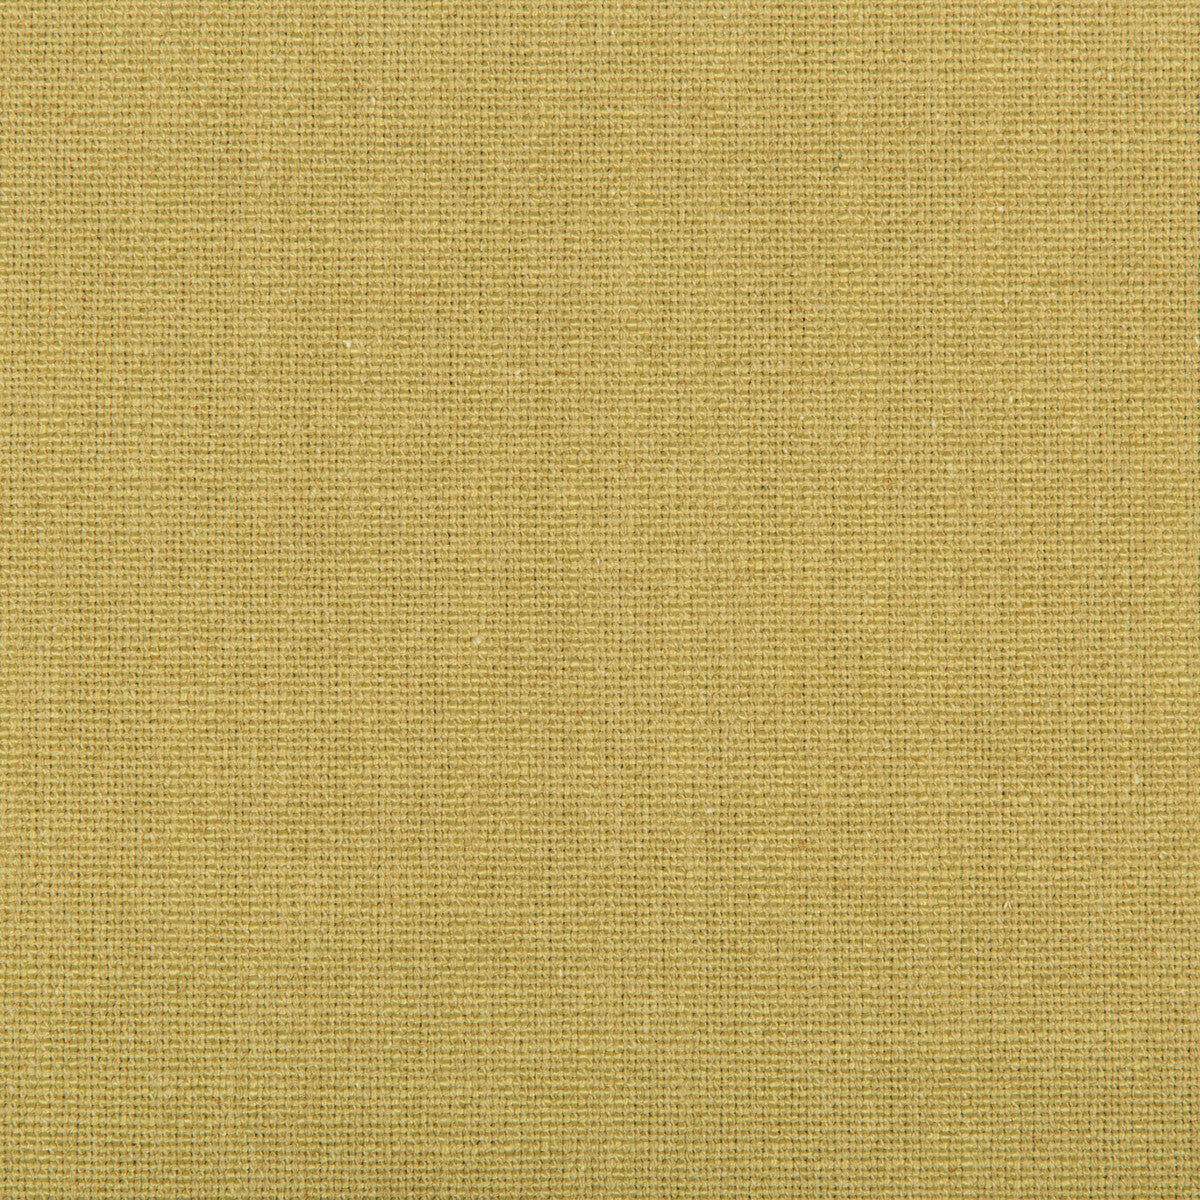 Kravet Smart fabric in 35226-340 color - pattern 35226.340.0 - by Kravet Smart in the Performance Kravetarmor collection